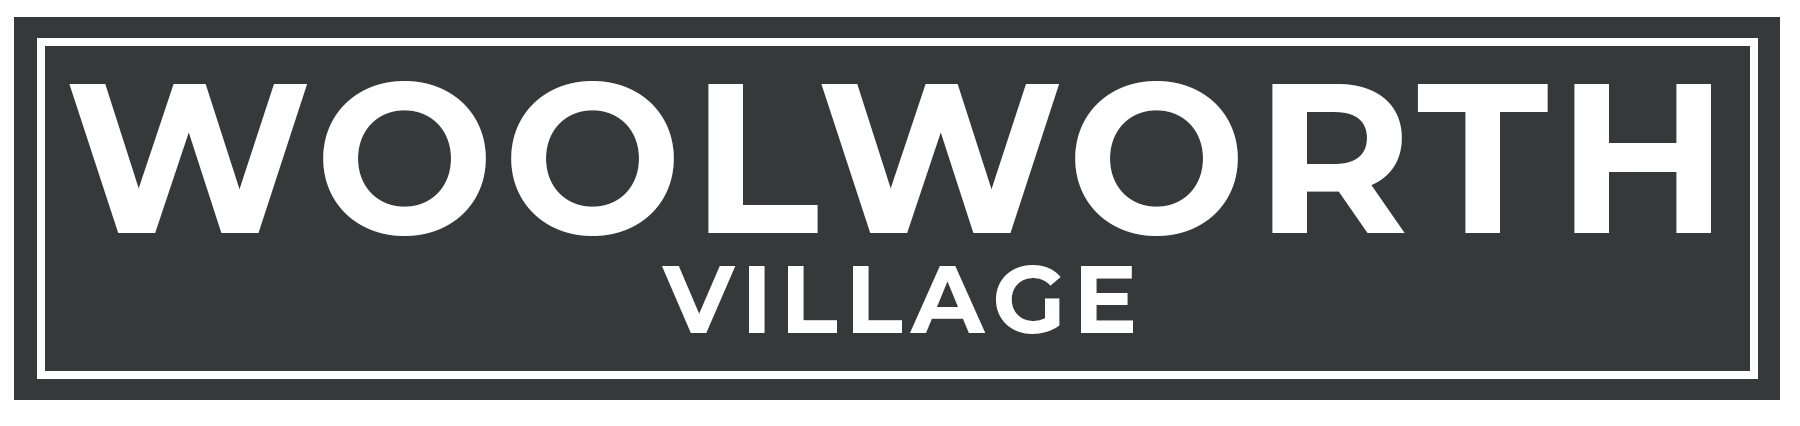 Woolworth Village